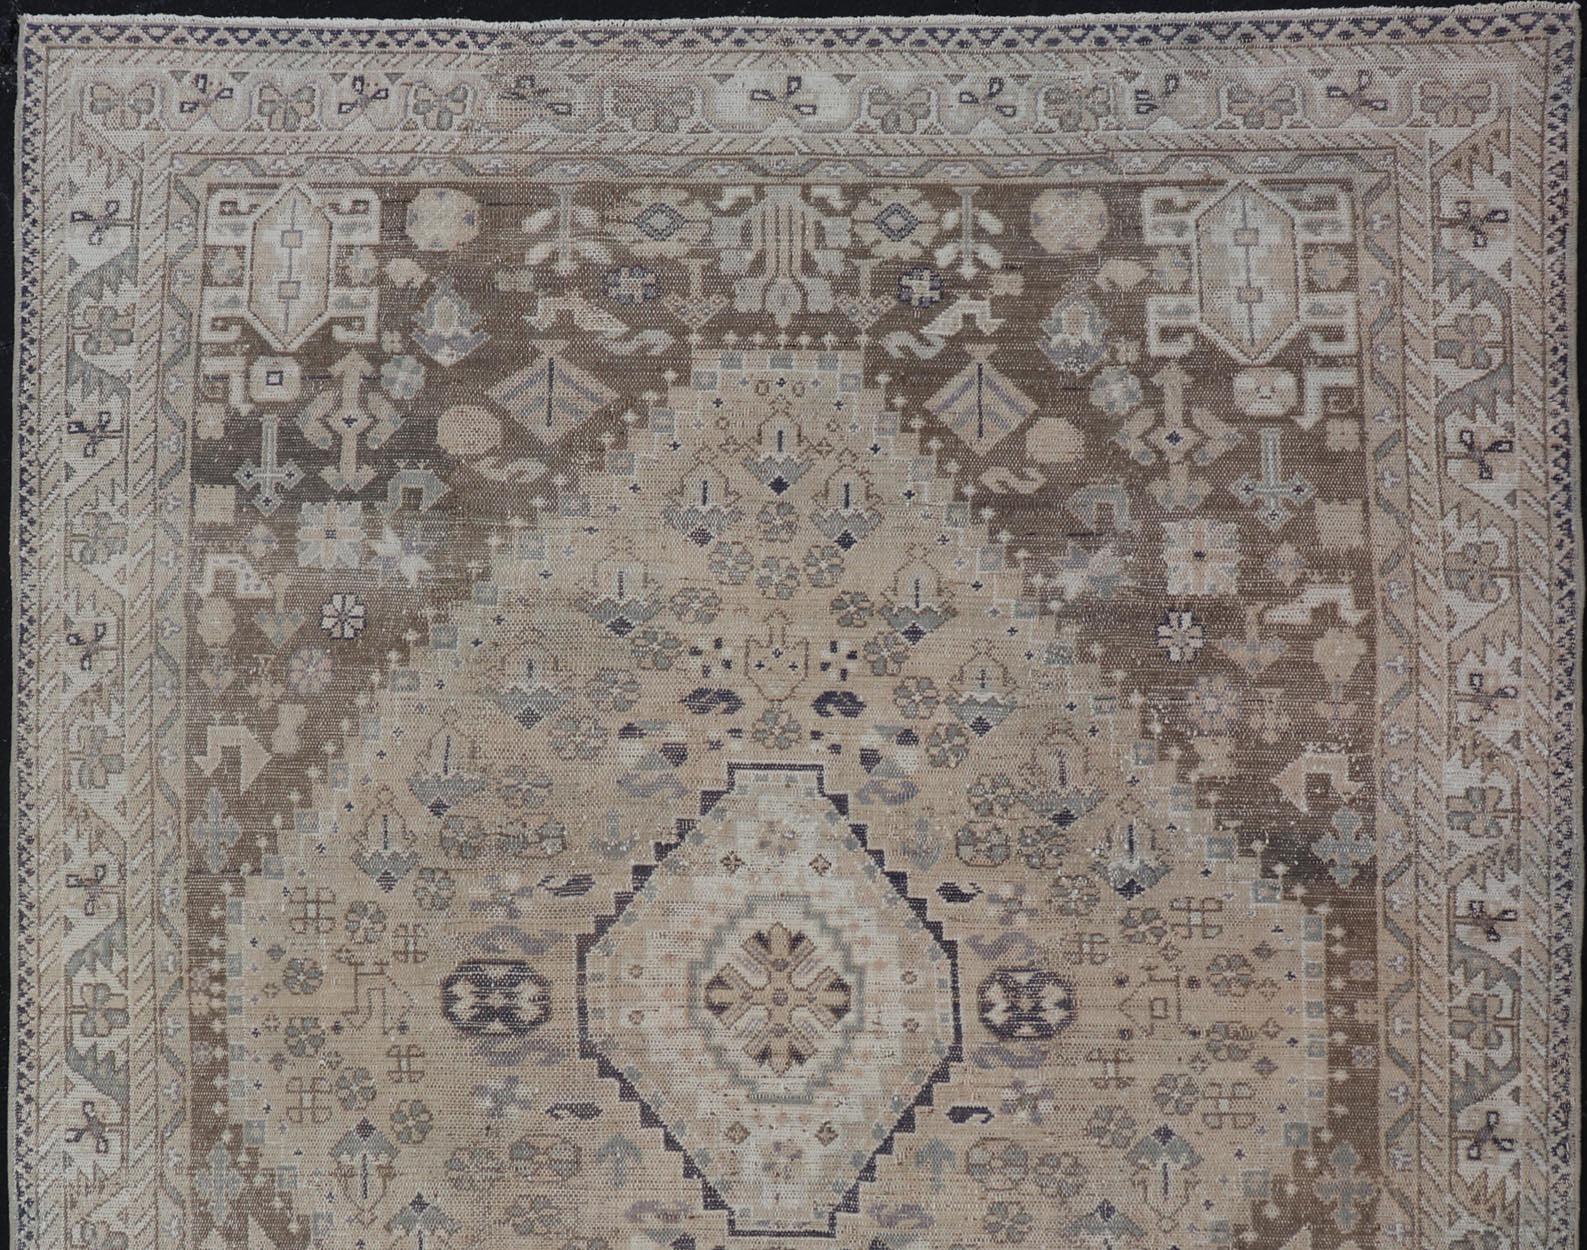 Brown/Taupe Antique Persian Shiraz rug with Vertical Sub-Geometric Medallion, rug EMB-9631-P13525, Keivan Woven Arts / country of origin / type: Iran / Shiraz, circa 1930

Measures: 5'5 x 7'5.